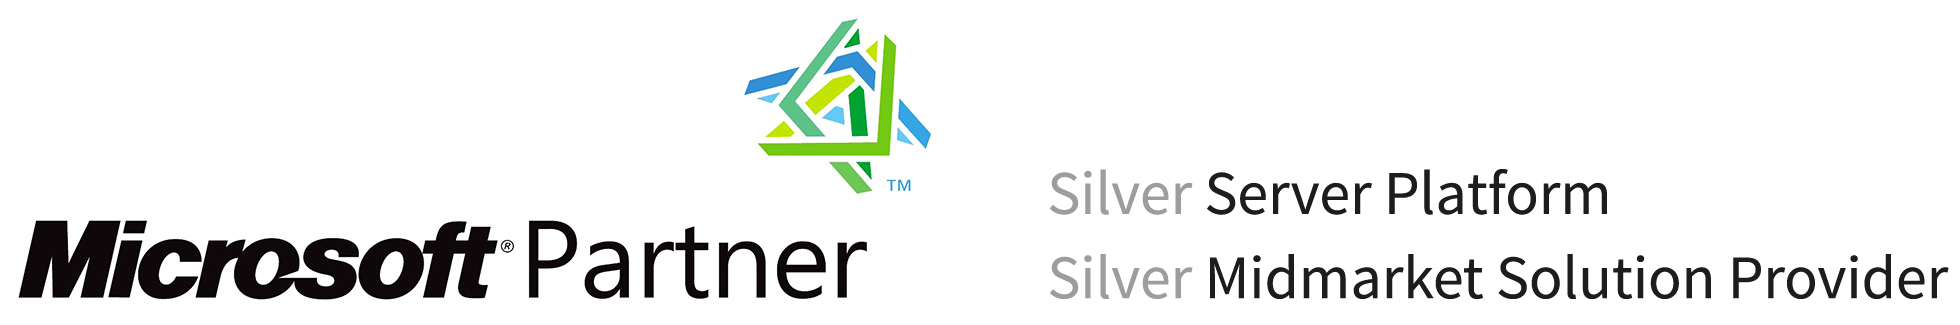 Microsoft Silver Server Partner